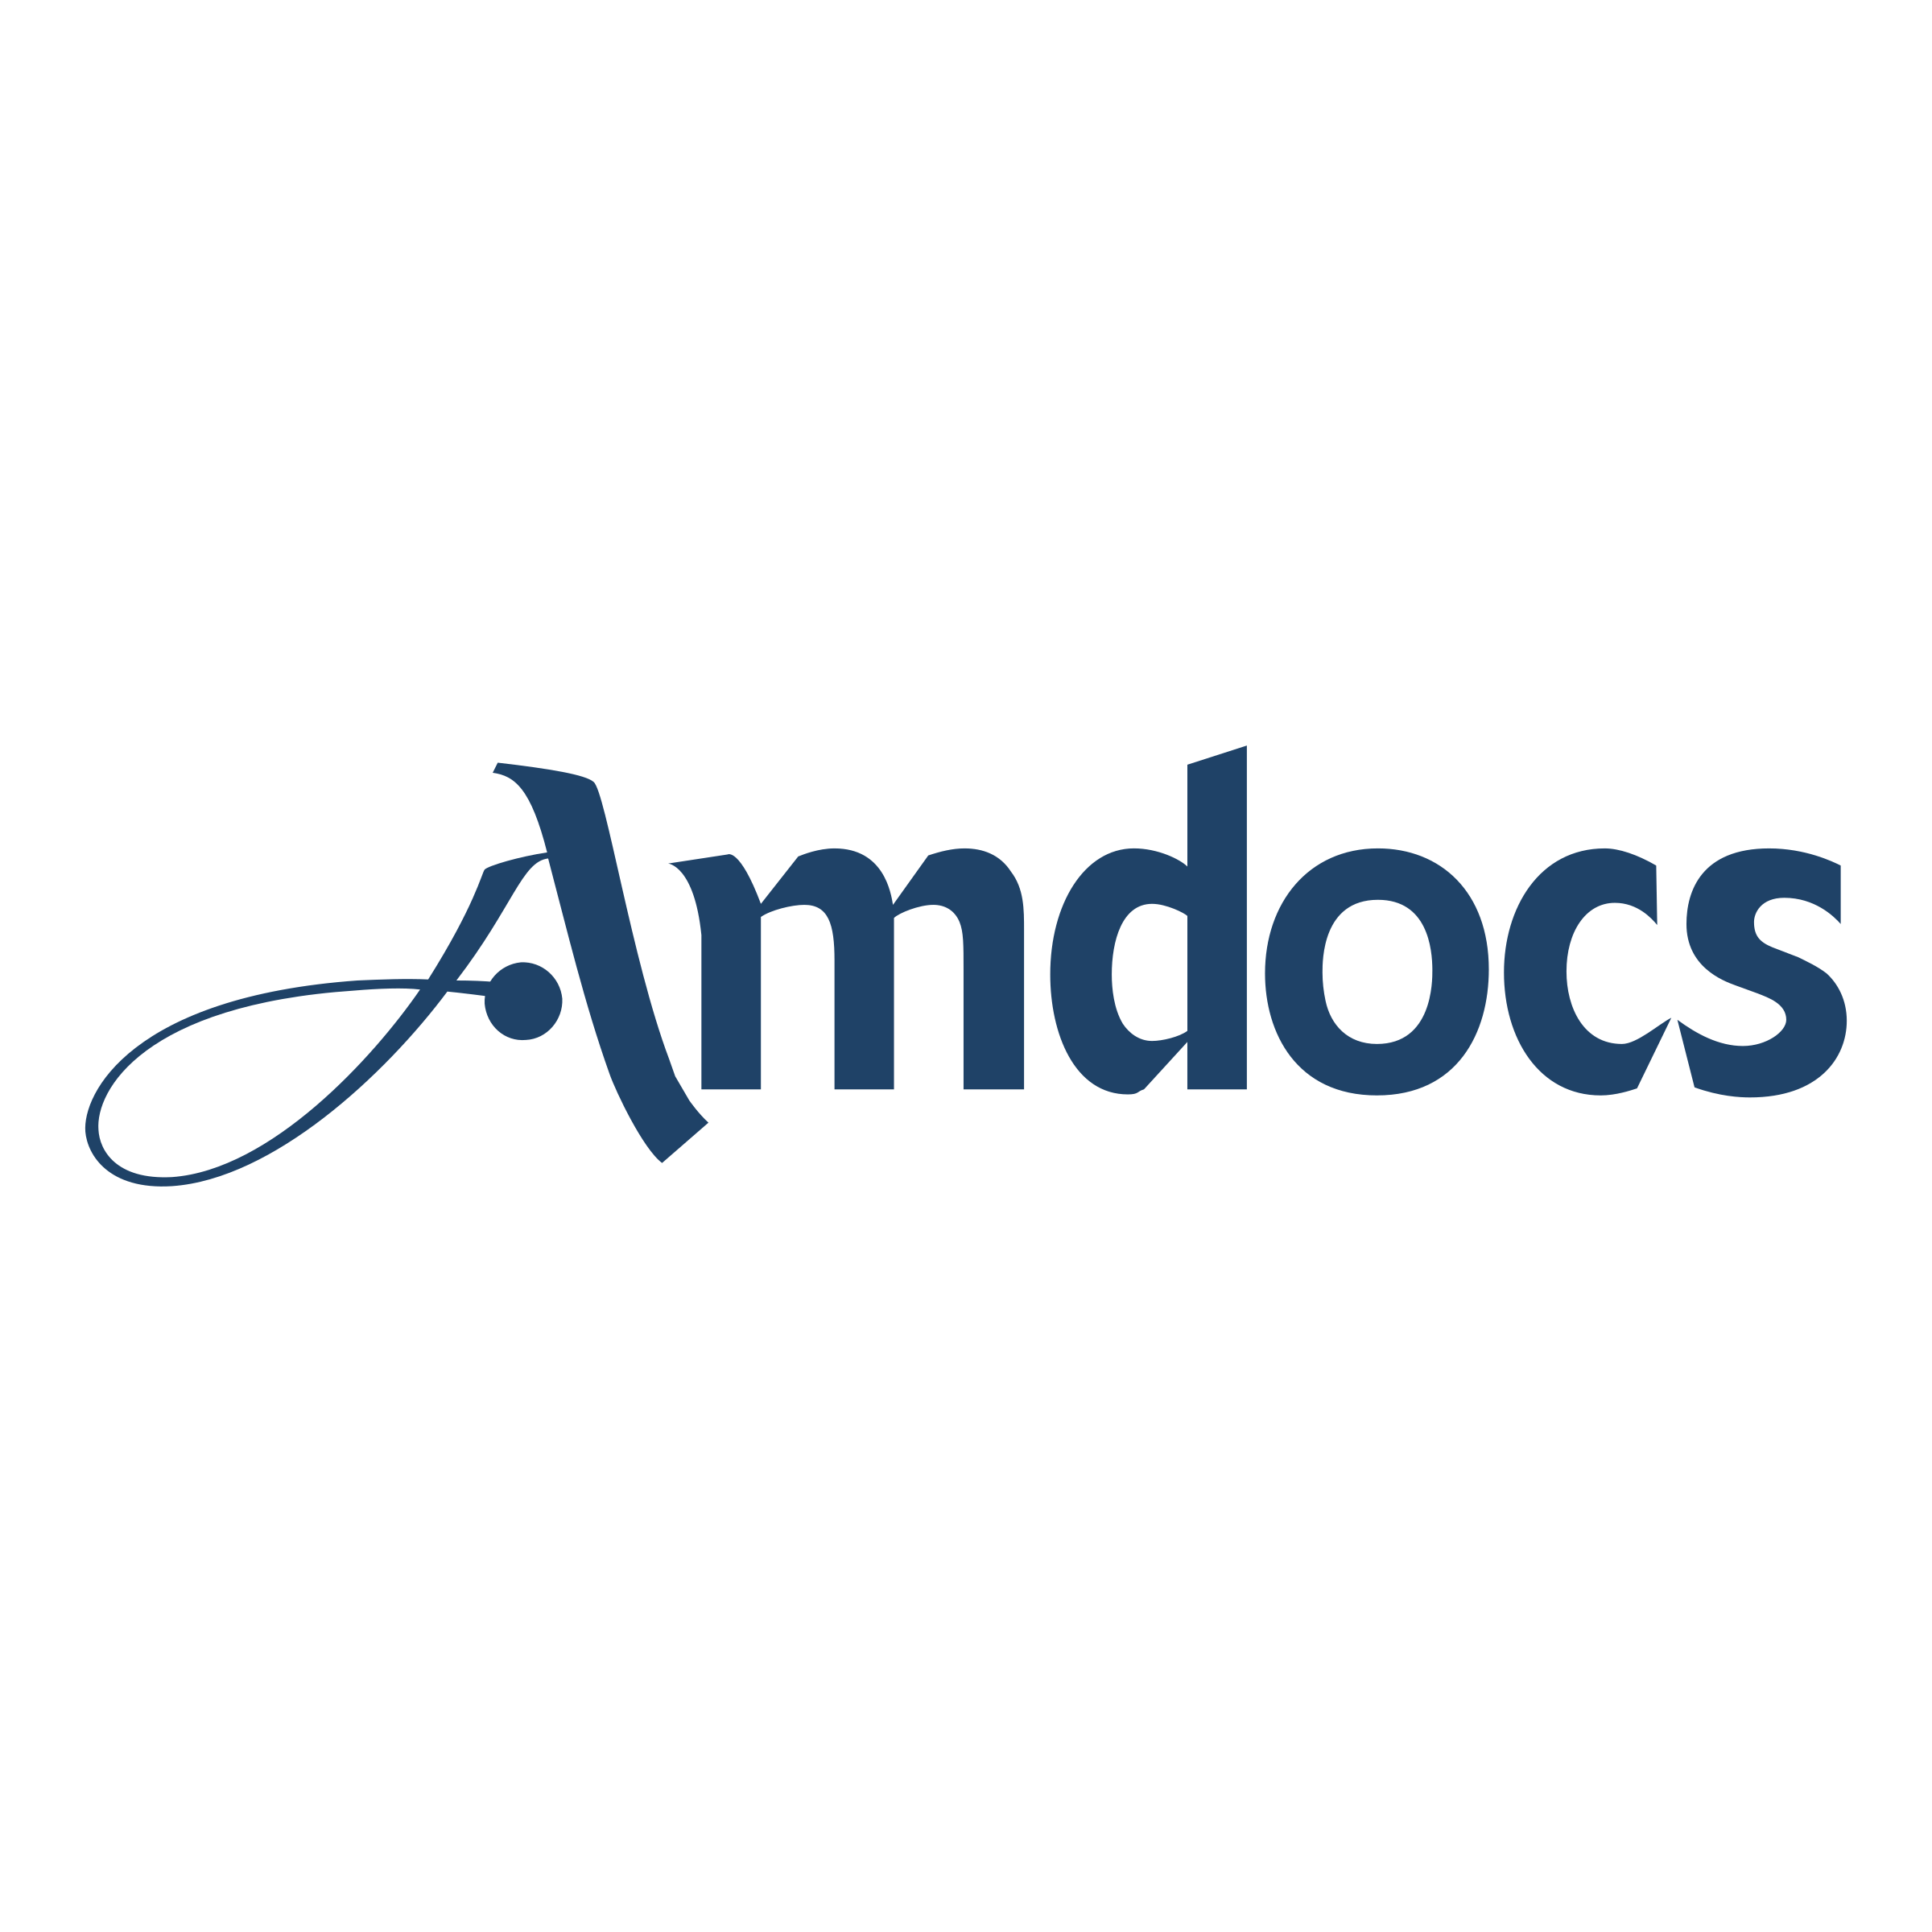 Amdocs Logo - Amdocs Logo PNG Transparent & SVG Vector - Freebie Supply